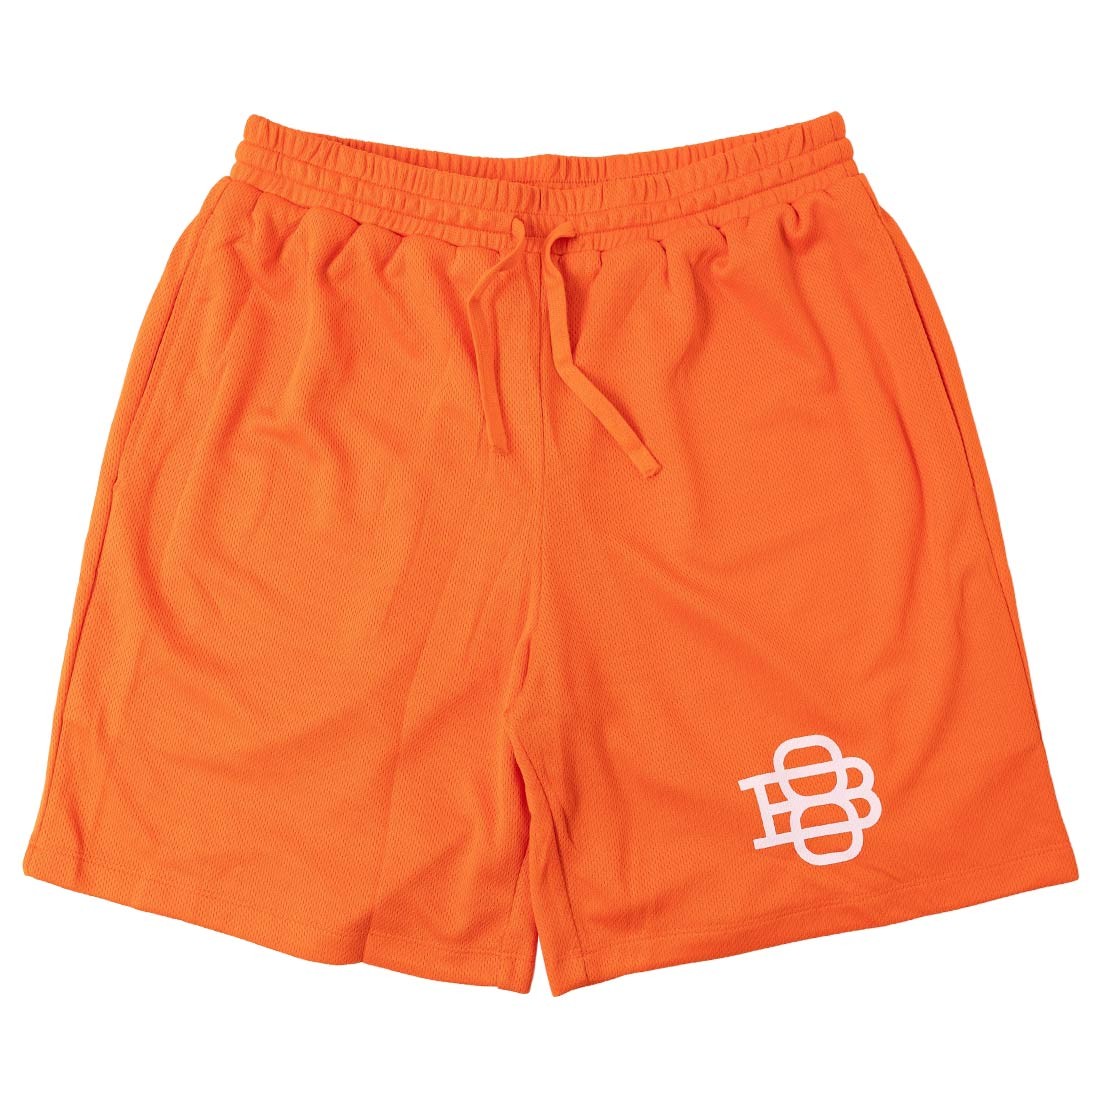 Men's Workout & Athletic Shorts in Orange